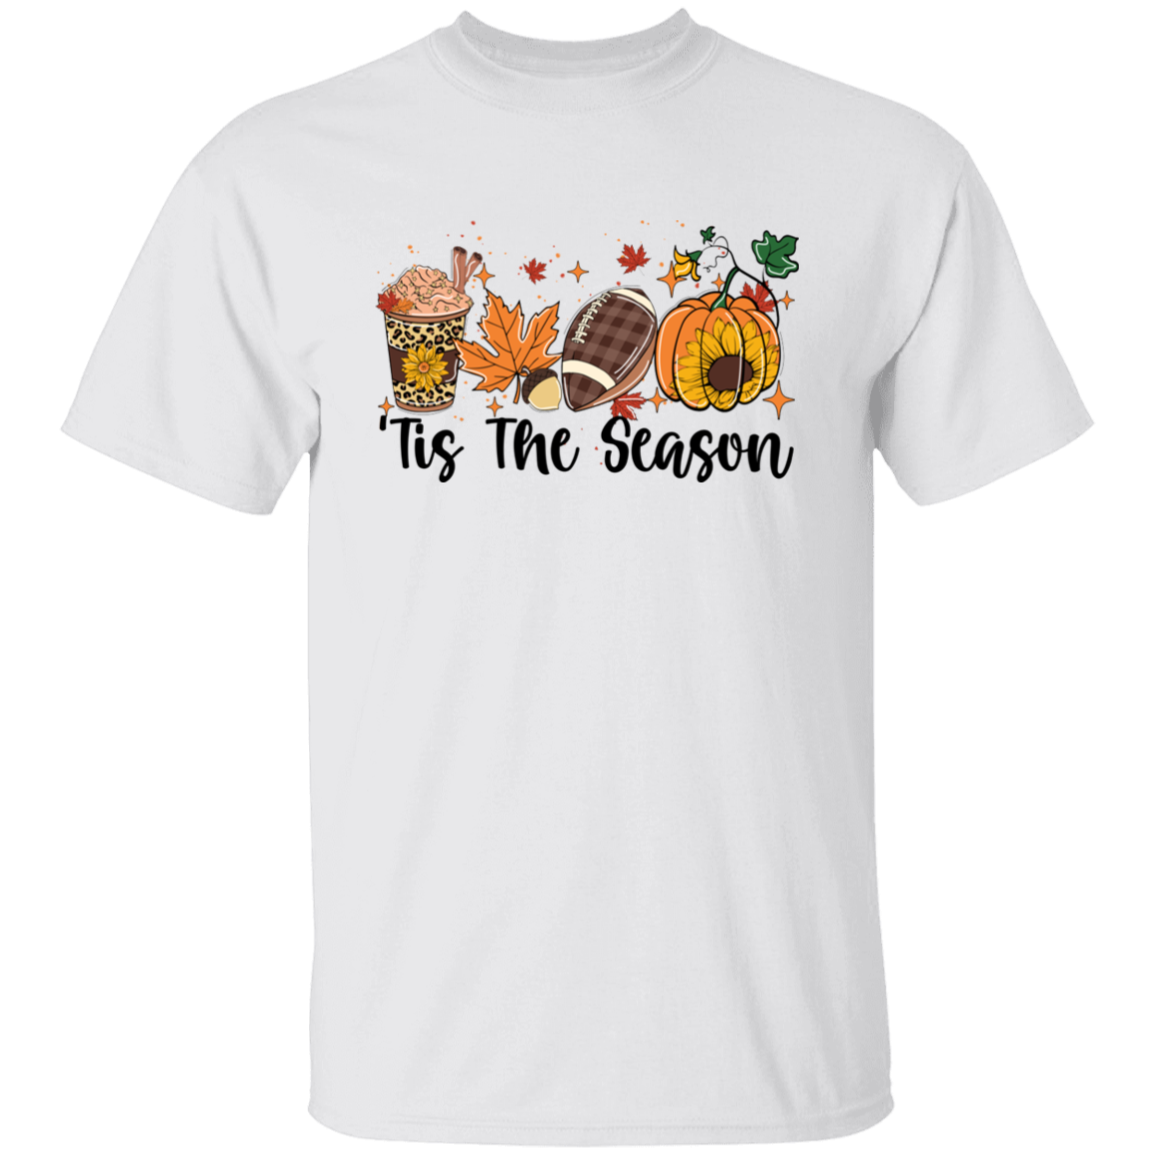 Tis the Season Football and Fall T-Shirt